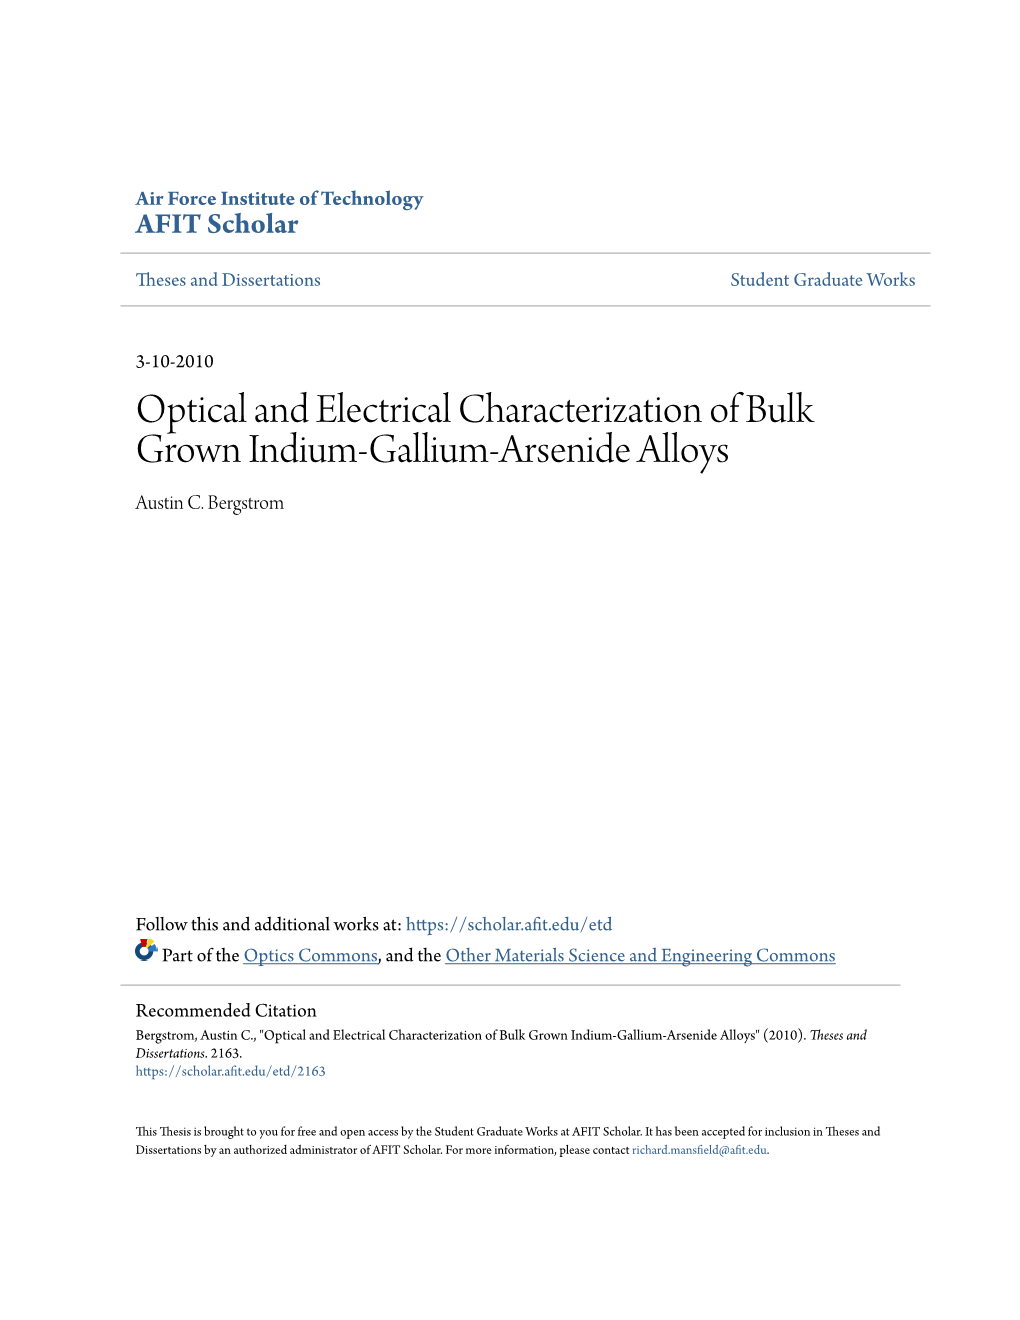 Optical and Electrical Characterization of Bulk Grown Indium-Gallium-Arsenide Alloys Austin C